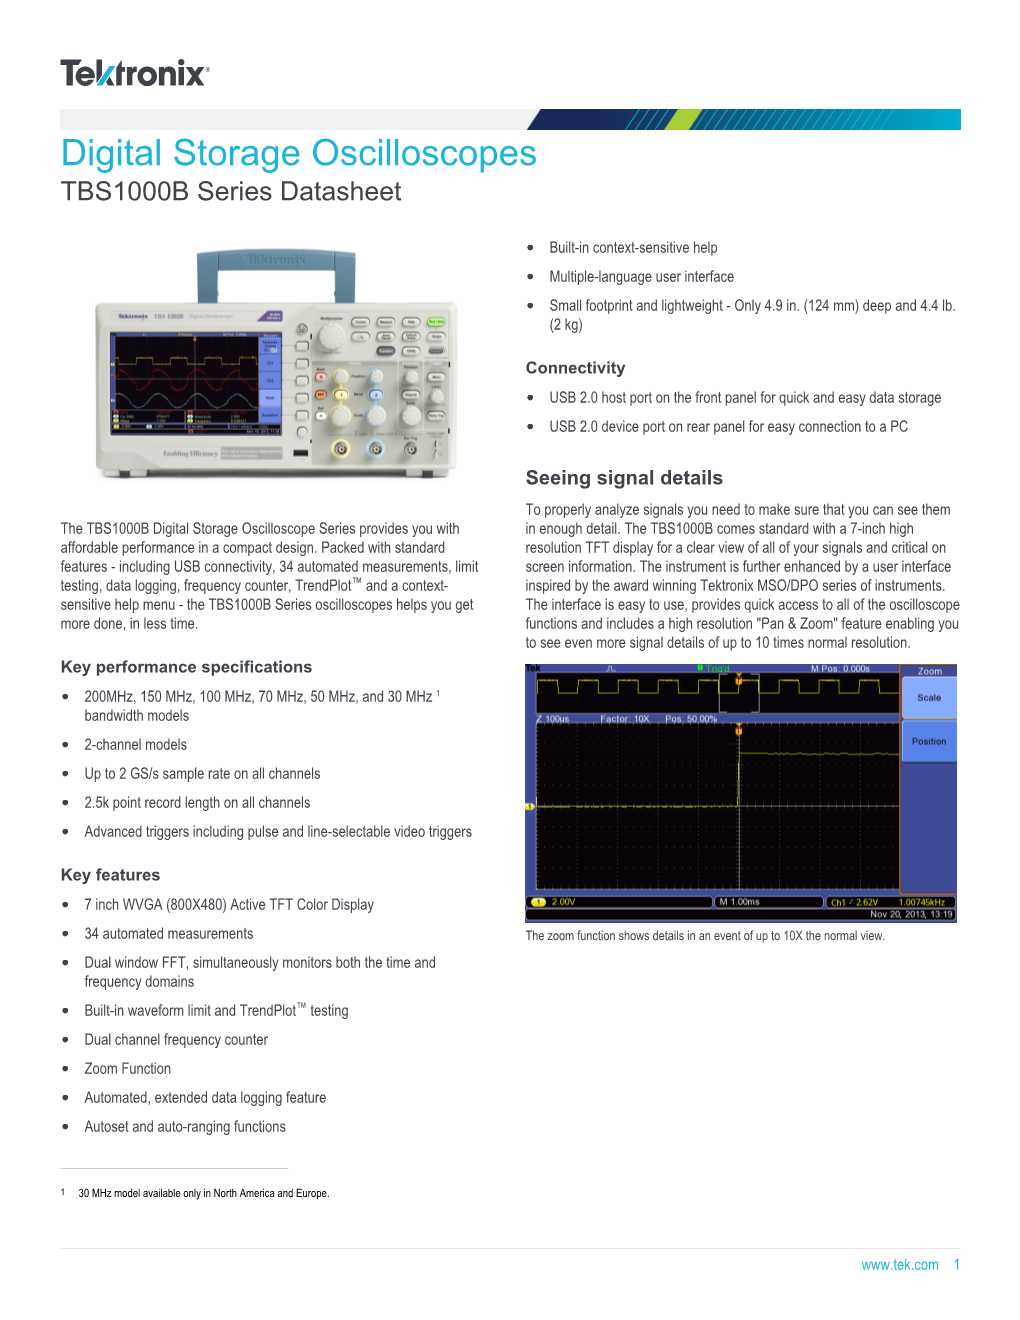 TBS1000B Digital Storage Oscilloscope Datasheet